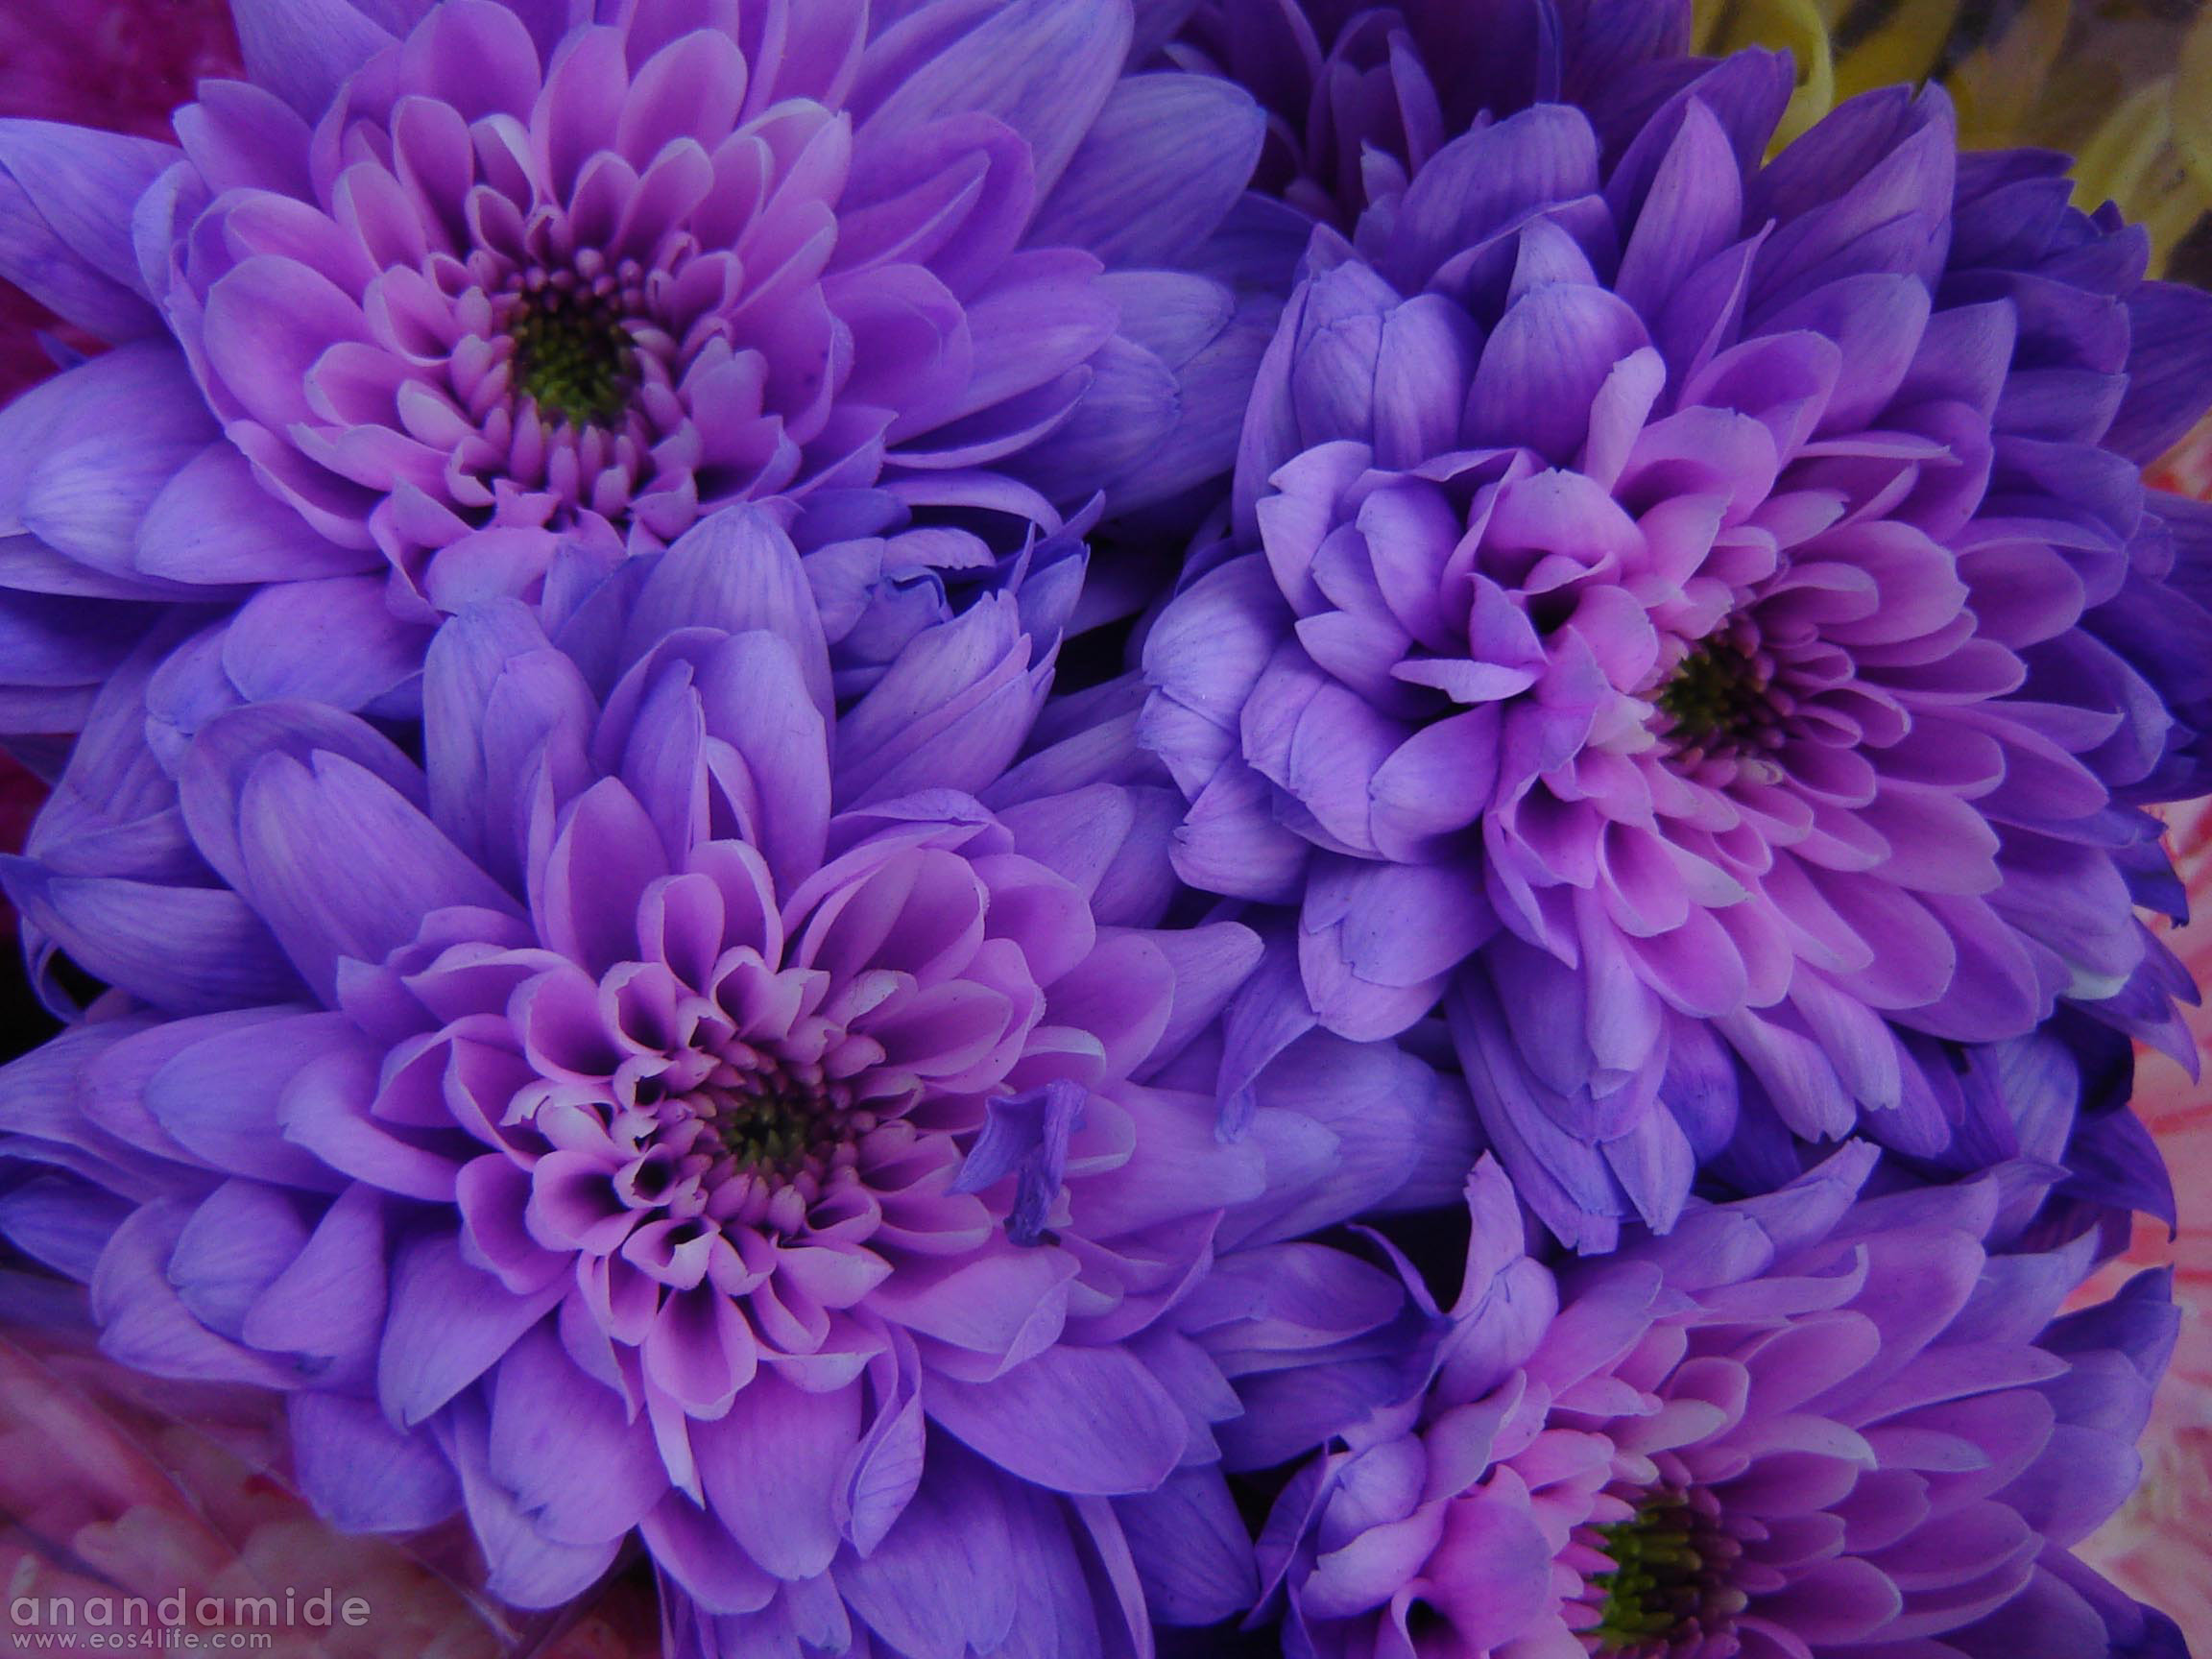 2304x1728 purple flowers pictures | Purple-Flower-Picture